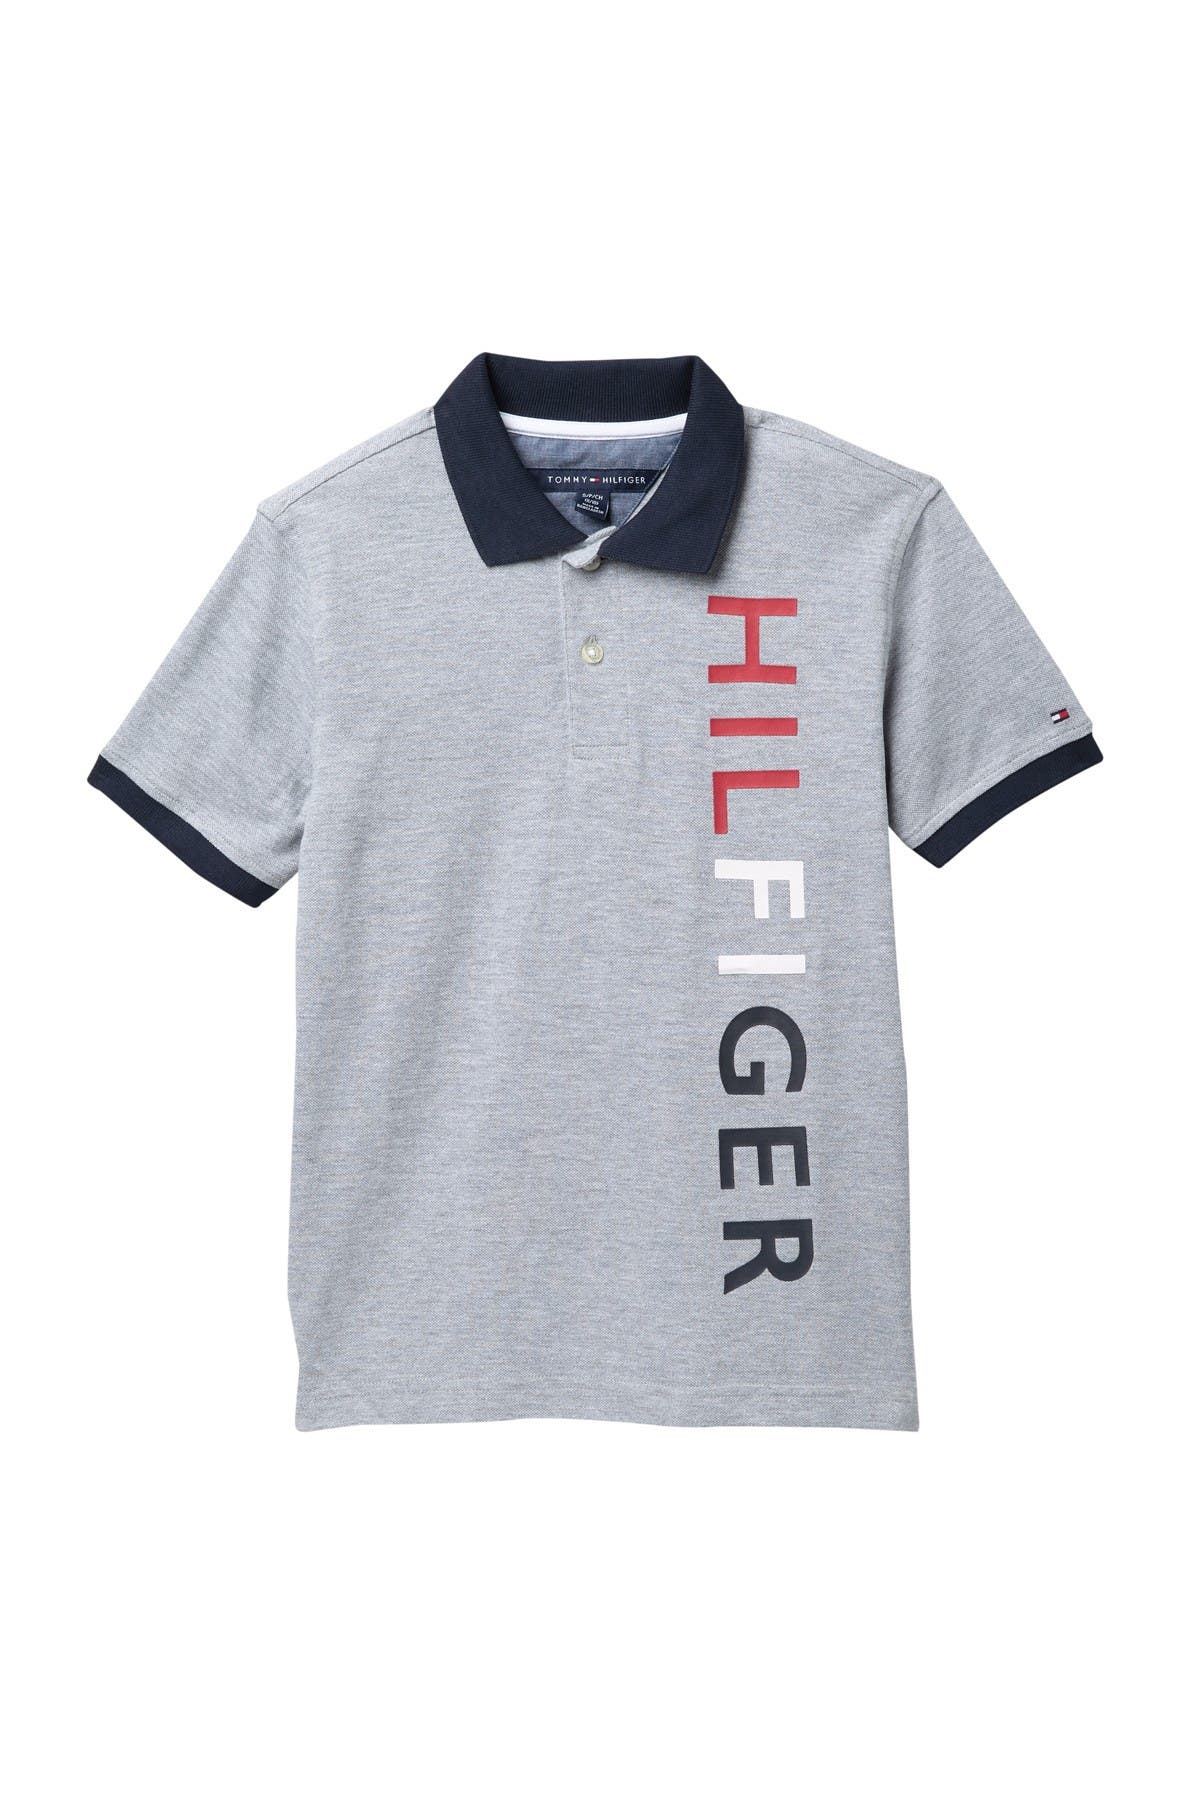 tommy hilfiger boys polo shirt